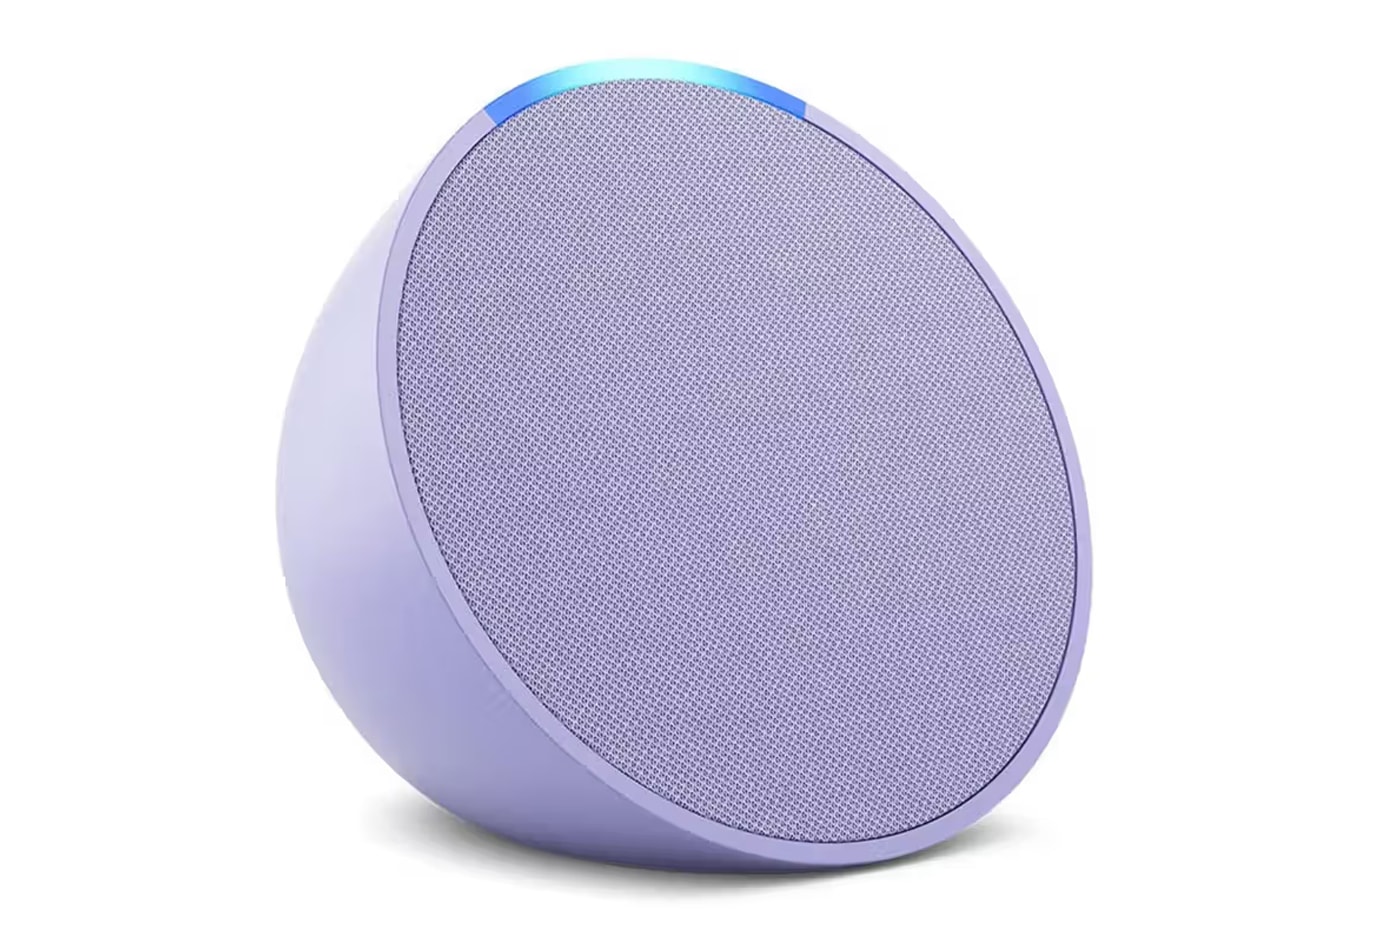 Amazon Echo Pop Sphere Shape Form New Smart Speaker Home Alexa Capability eero WiFi Network Price Cost Details